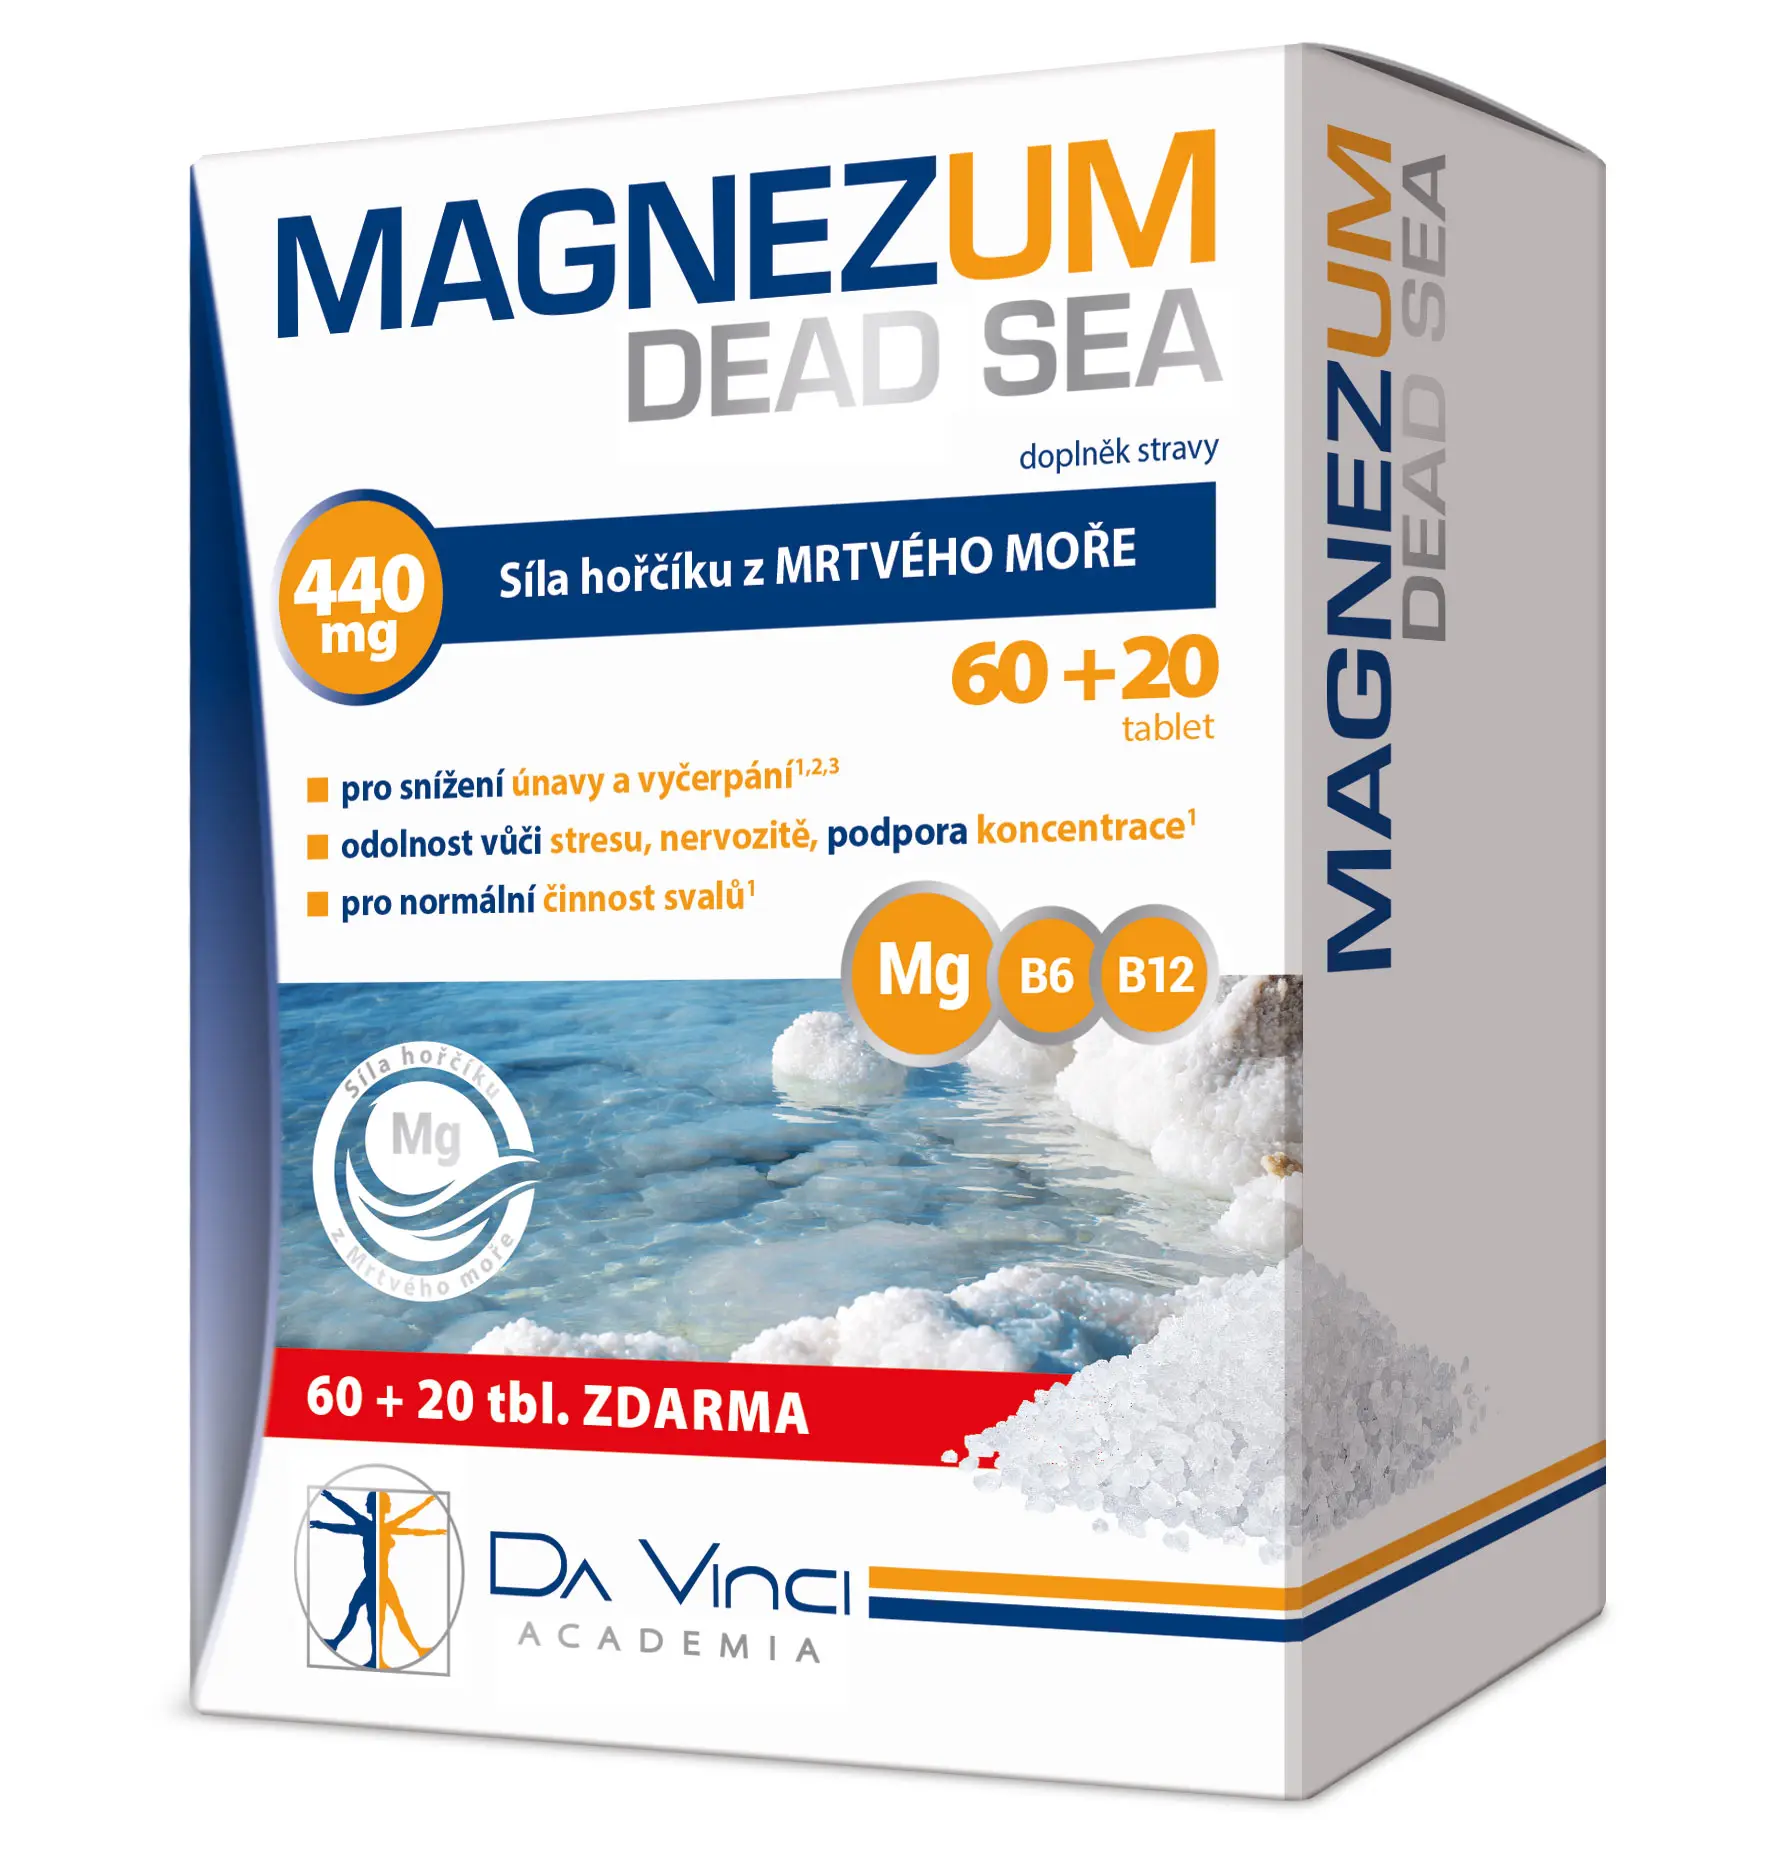 Simply You Magnezum Dead Sea 80 tablet